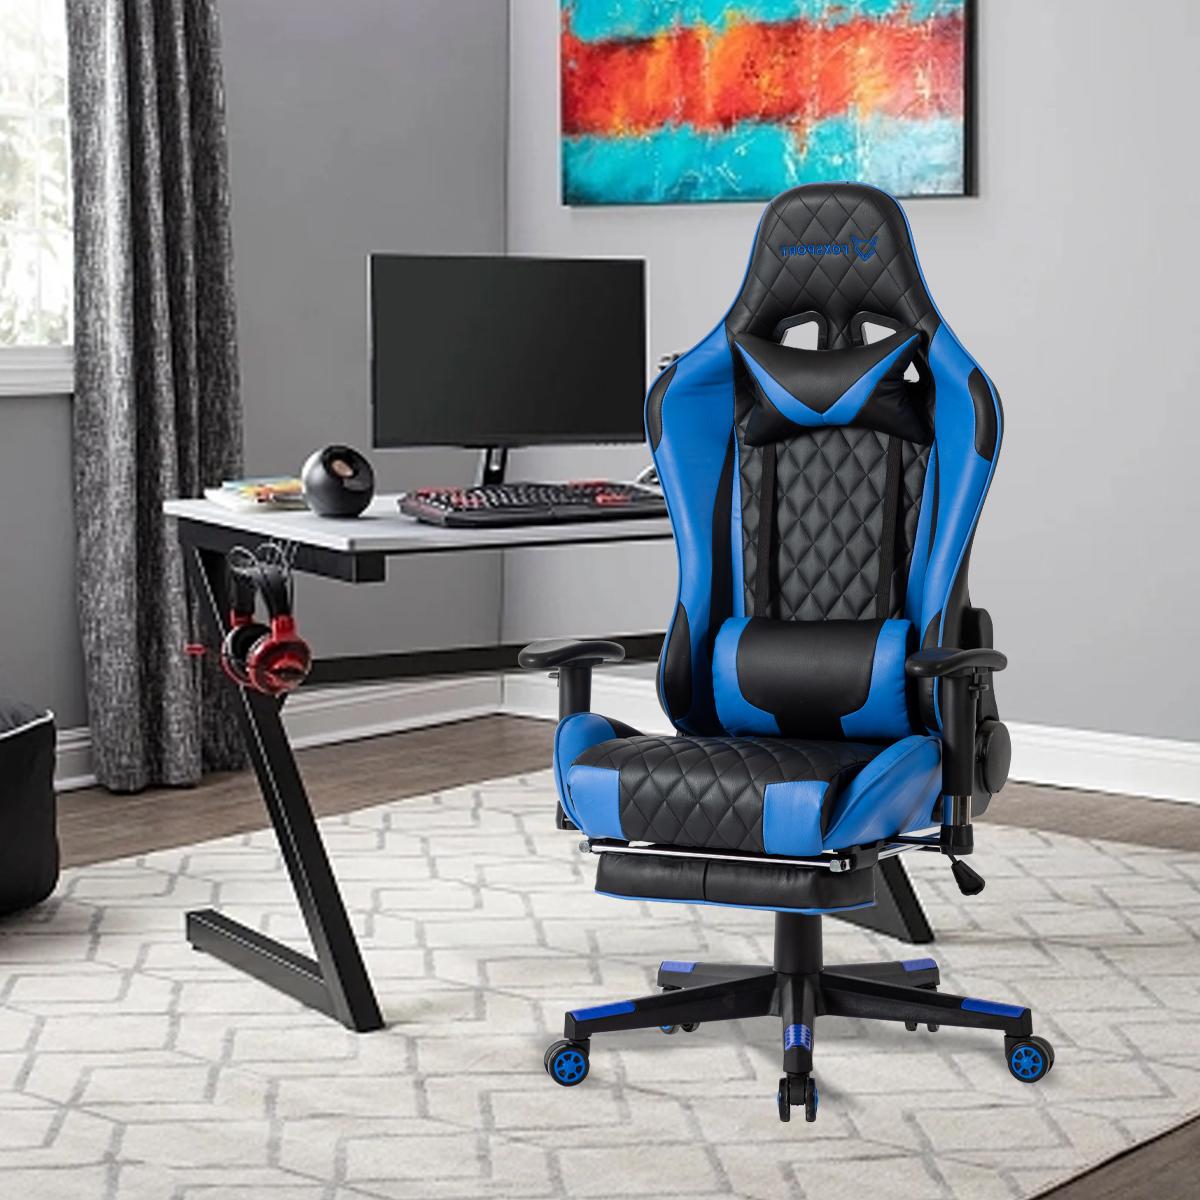 FOXSPORT Stuhl mit Blau blau Gaming-Stuhl, Beinstütze